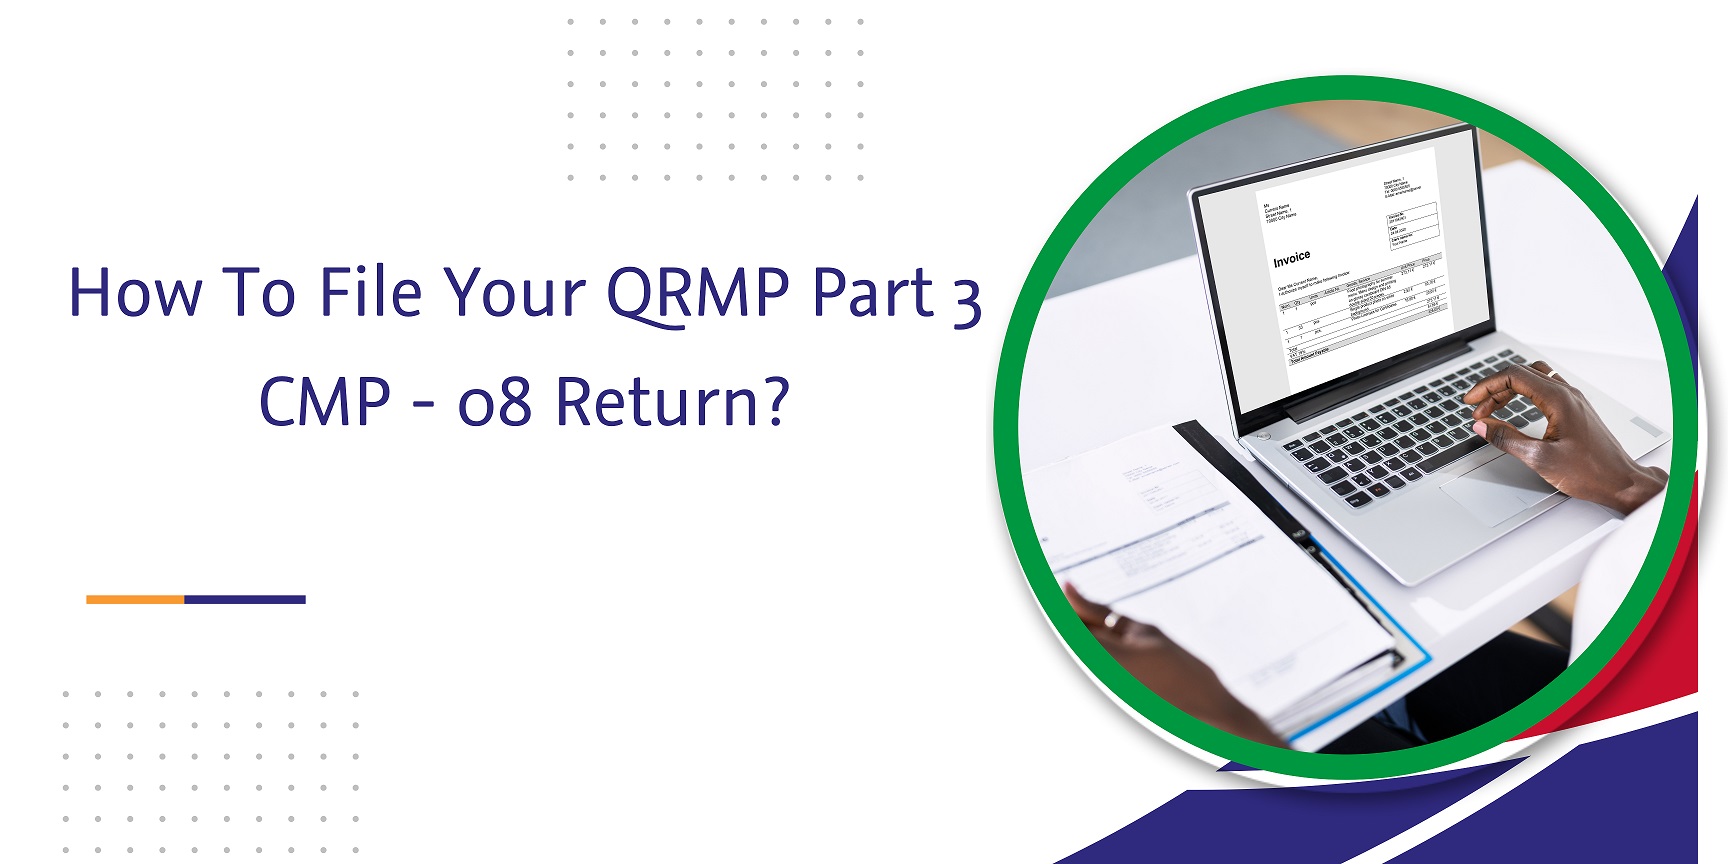 how to file your qrmp part 3 cmp - 08 return